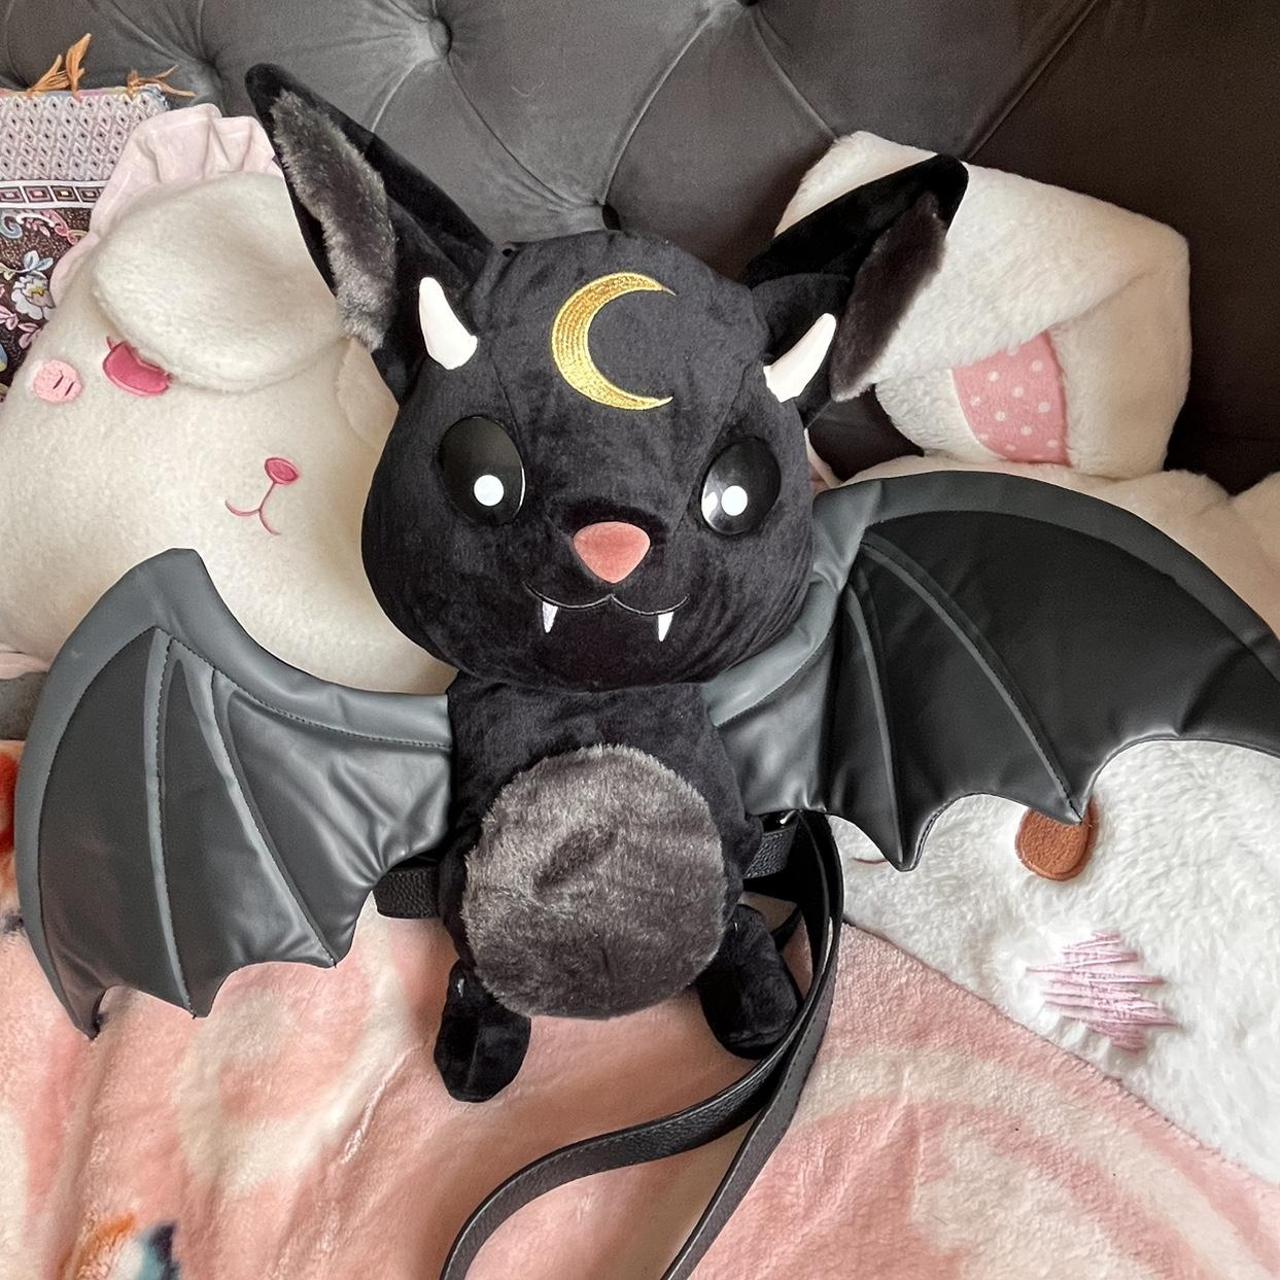  Killstar Vampire Bat Kreeptures Gothic Plush Stuffed Animal  Backpack KSRA002763 : Clothing, Shoes & Jewelry